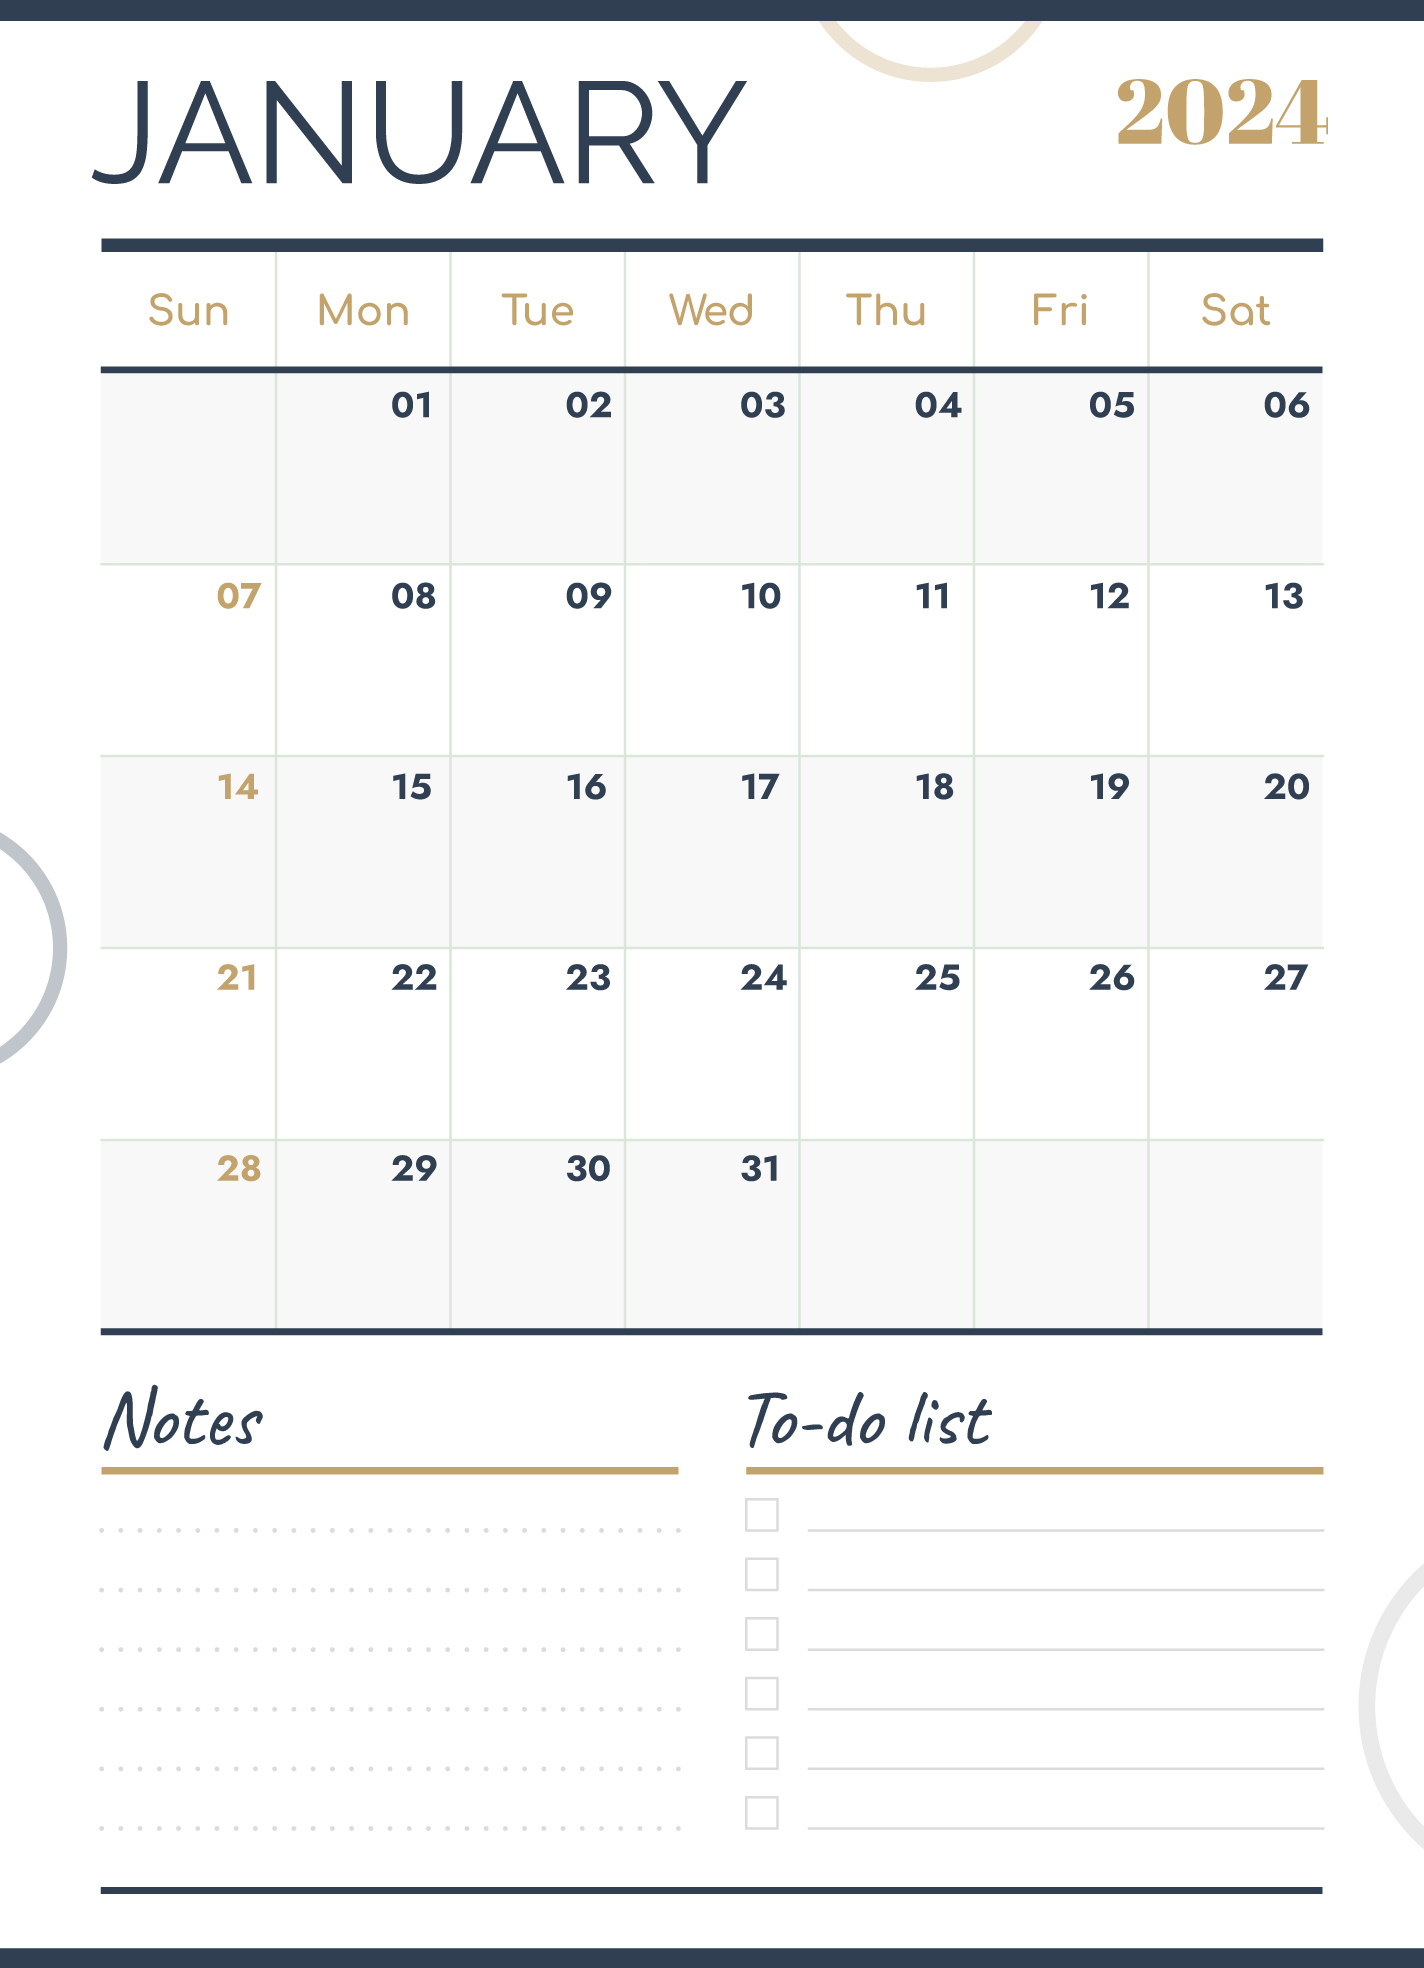 January 2024 Calendar Free Google Docs Template - Gdoc.io | Google Free Printable Calendar 2024